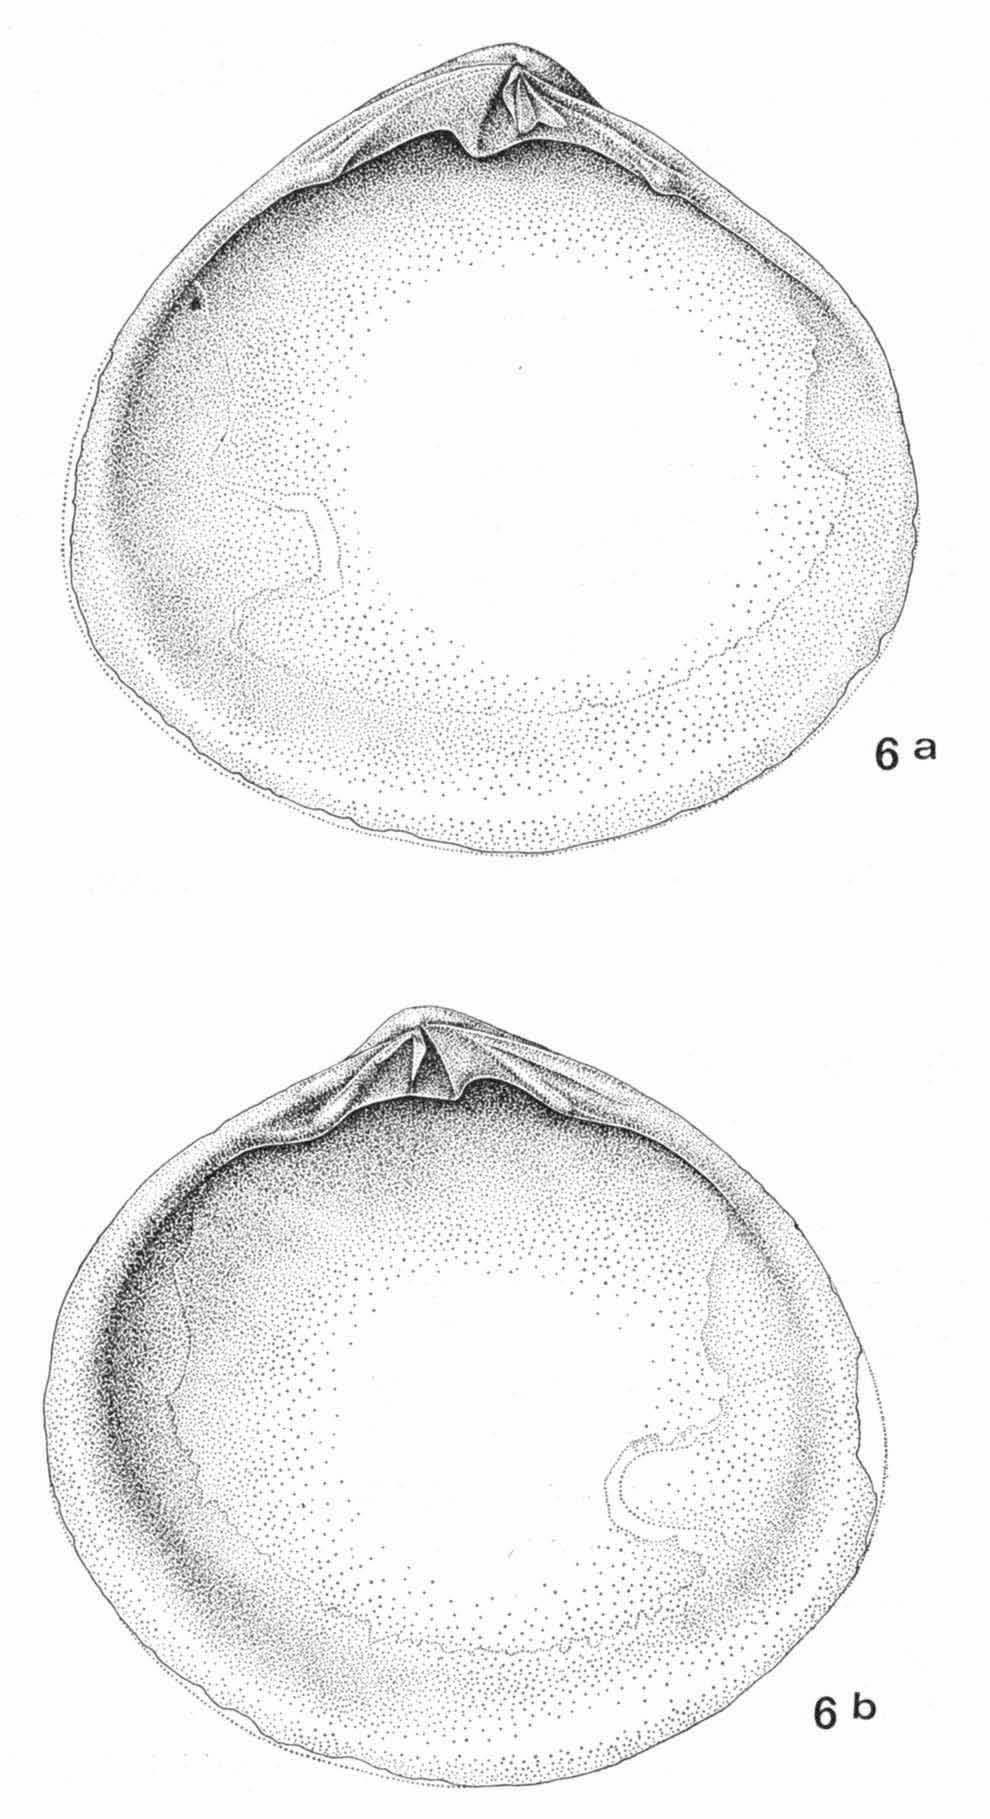 DE ROOIJ-SCHUILING, MESODESMATIDAE 65 Fig. 6. Coecella horsfieldi formosa subspec. nov. a, left valve of paratype, natural size 16.3 X 14.3 mm; b, right valve of holotype, natural size 15.7 X 14.5 mm.